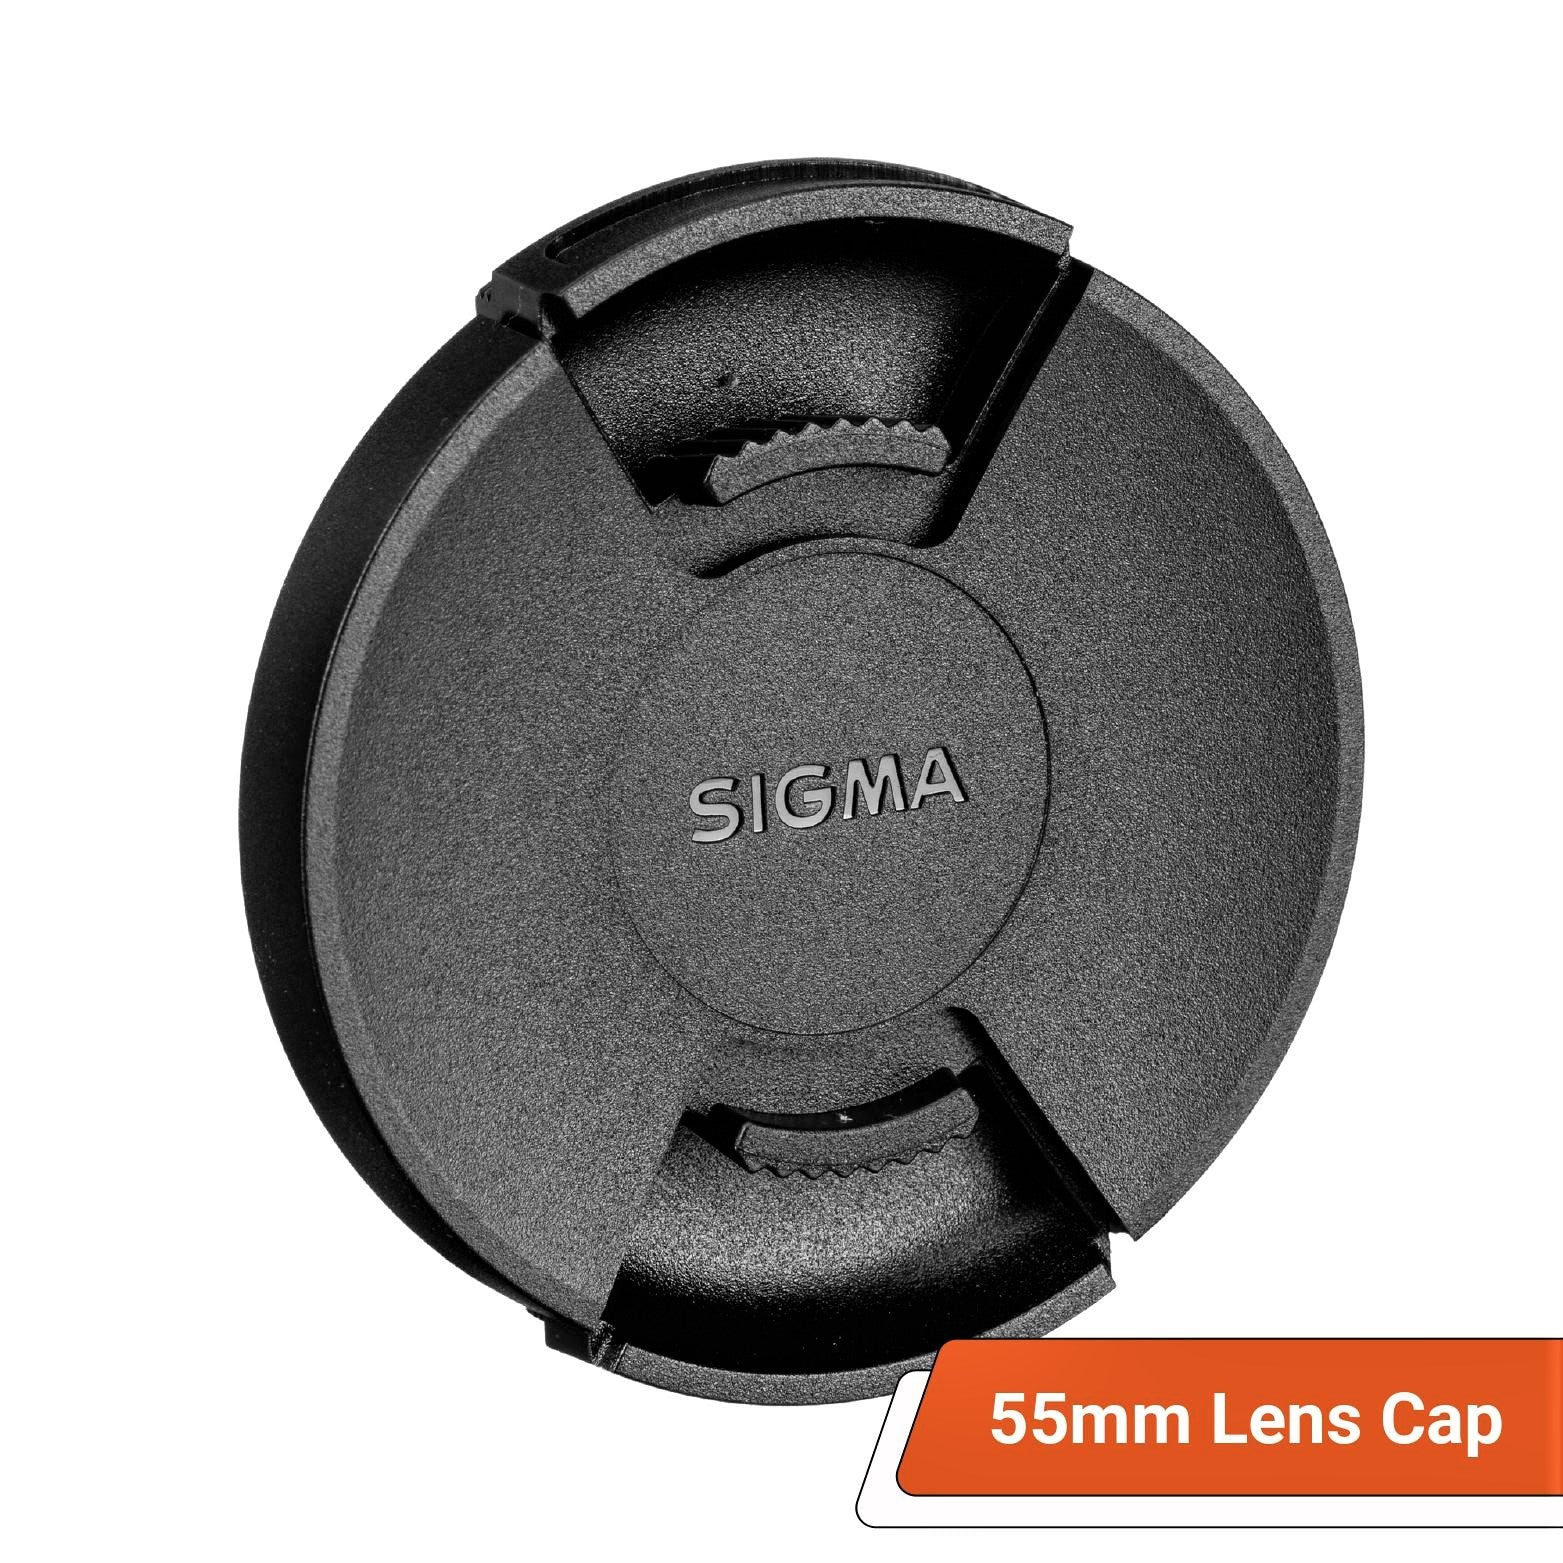 Sigma LCF-55 III 55mm Lens Cap